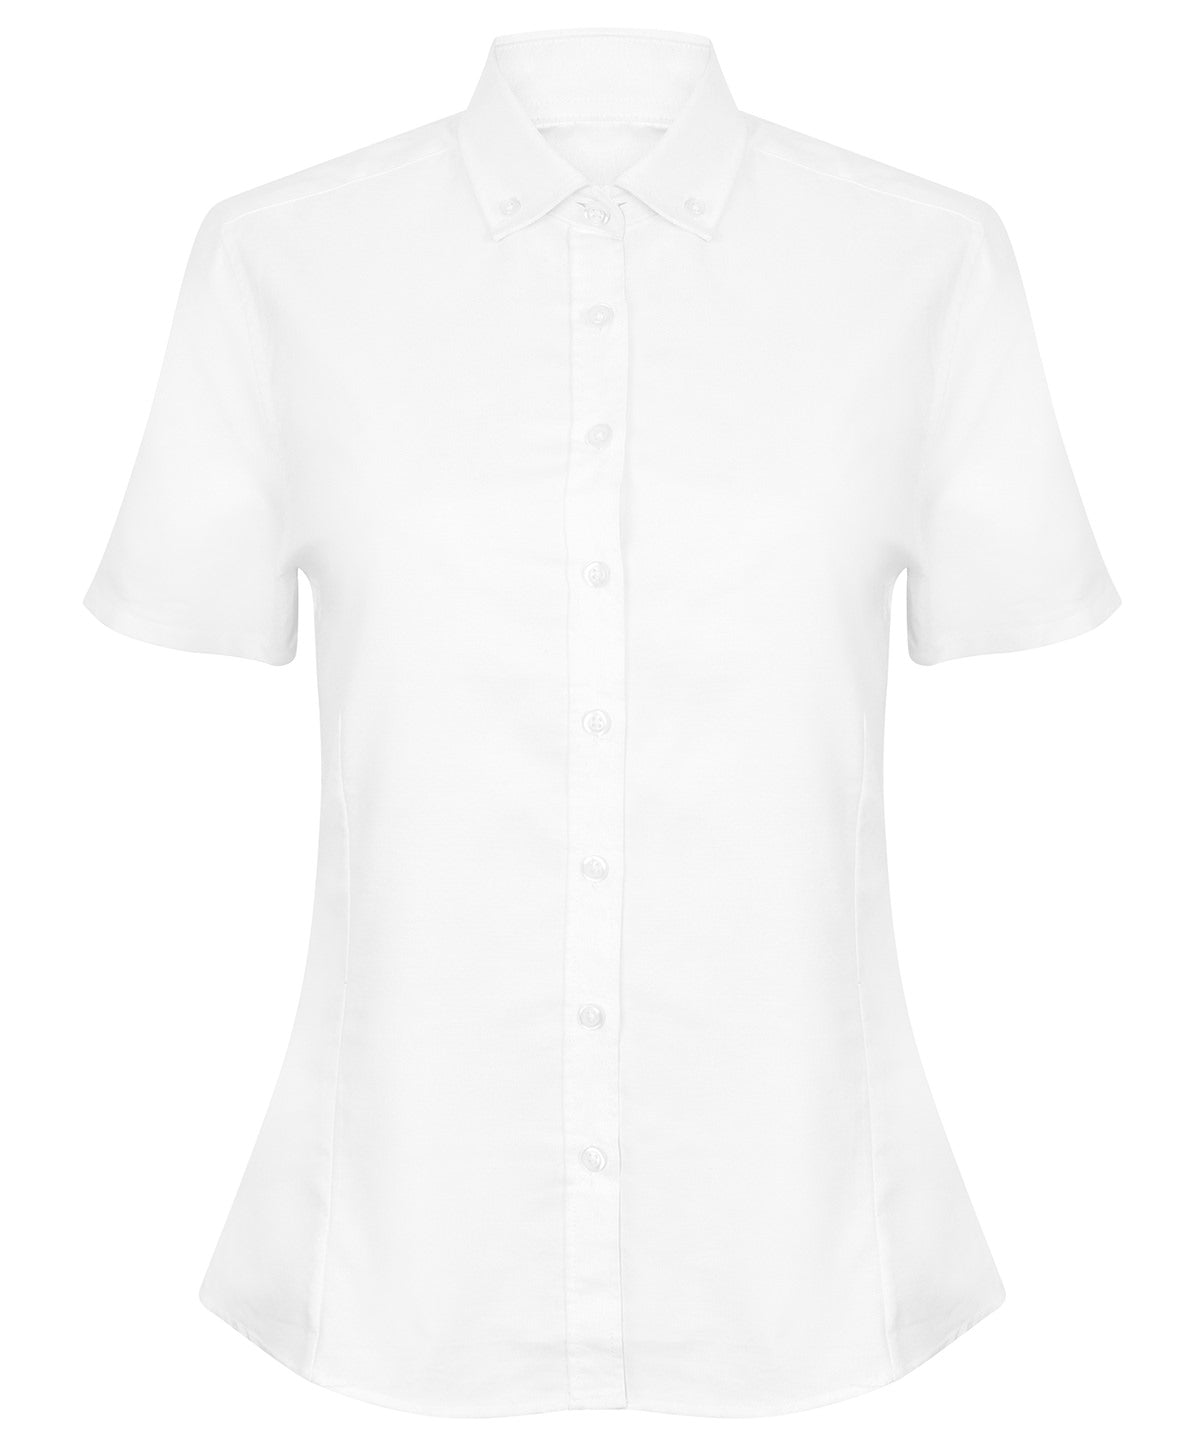 Bolir - Women's Modern Short Sleeve Oxford Shirt